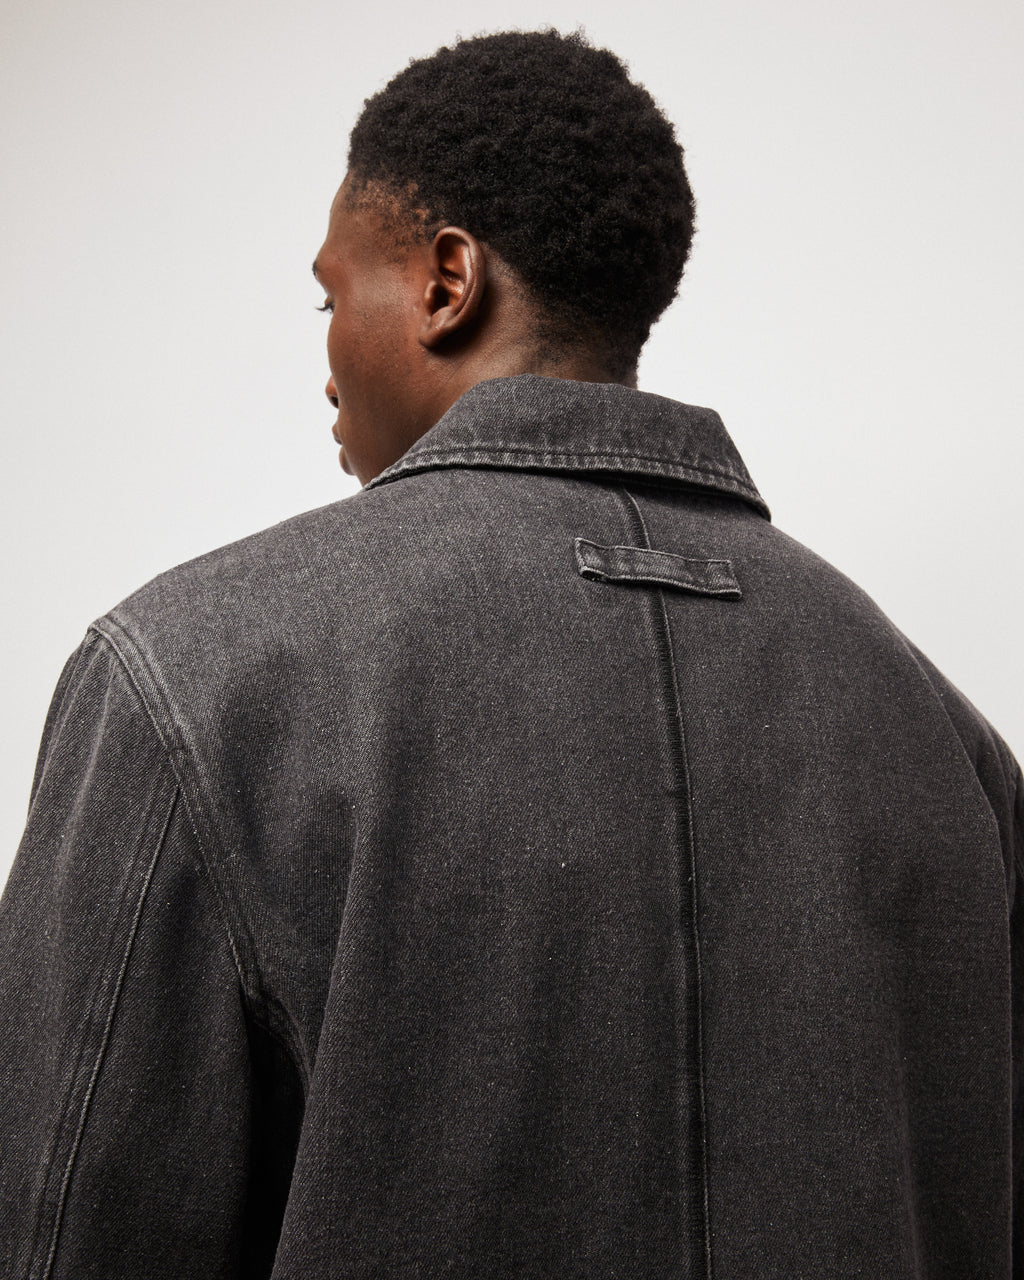 Brixtol Textiles Martin jacket, Washed Black